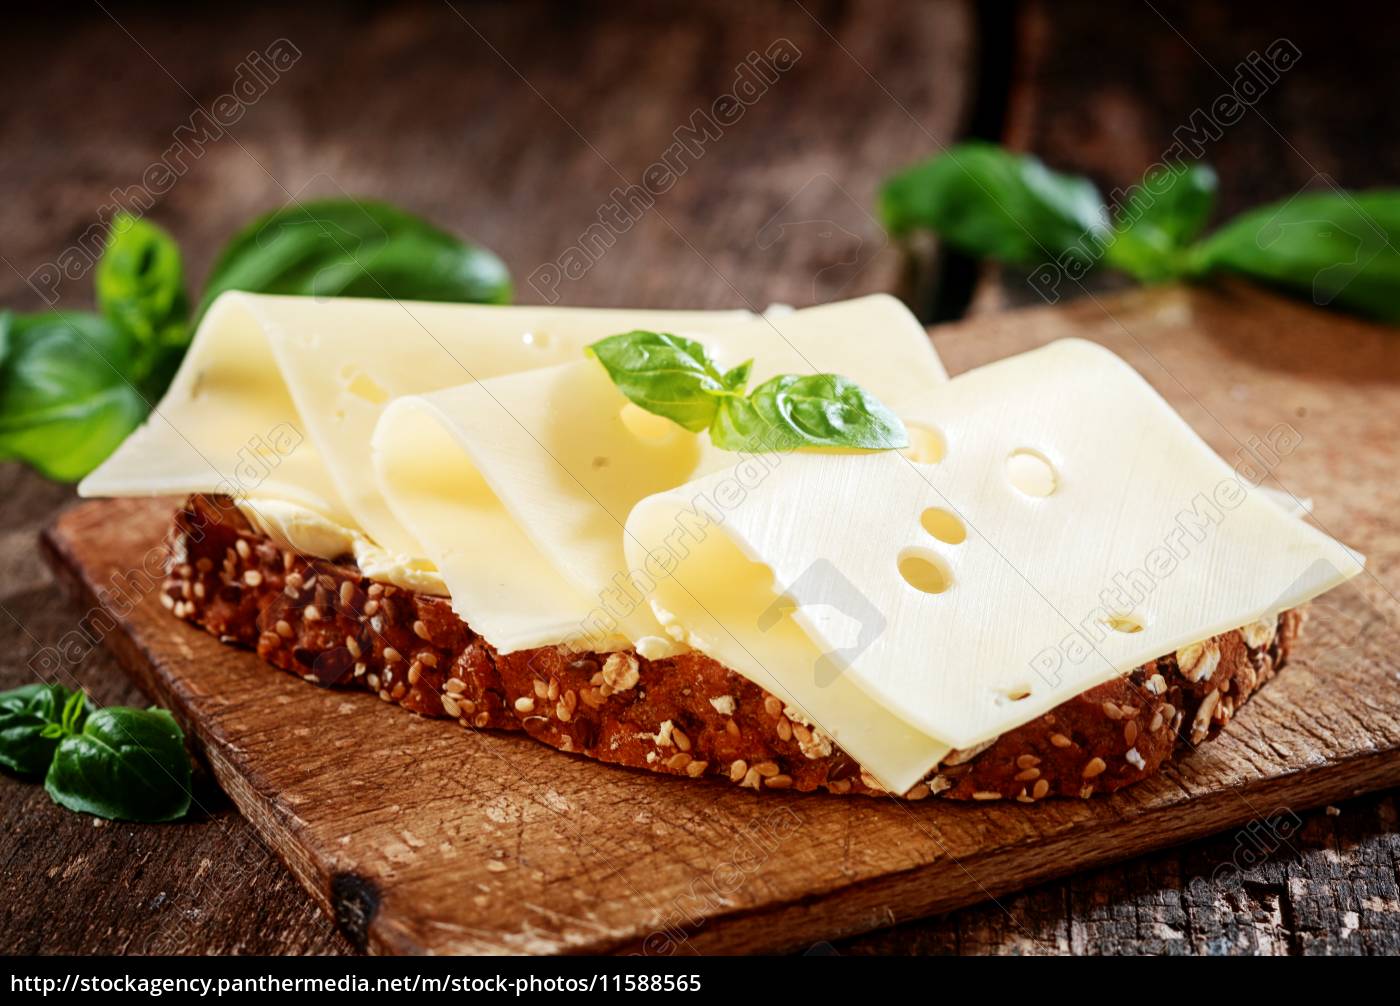 gouda-käse auf vollkorn brot - Stockfoto - #11588565 | Bildagentur ...